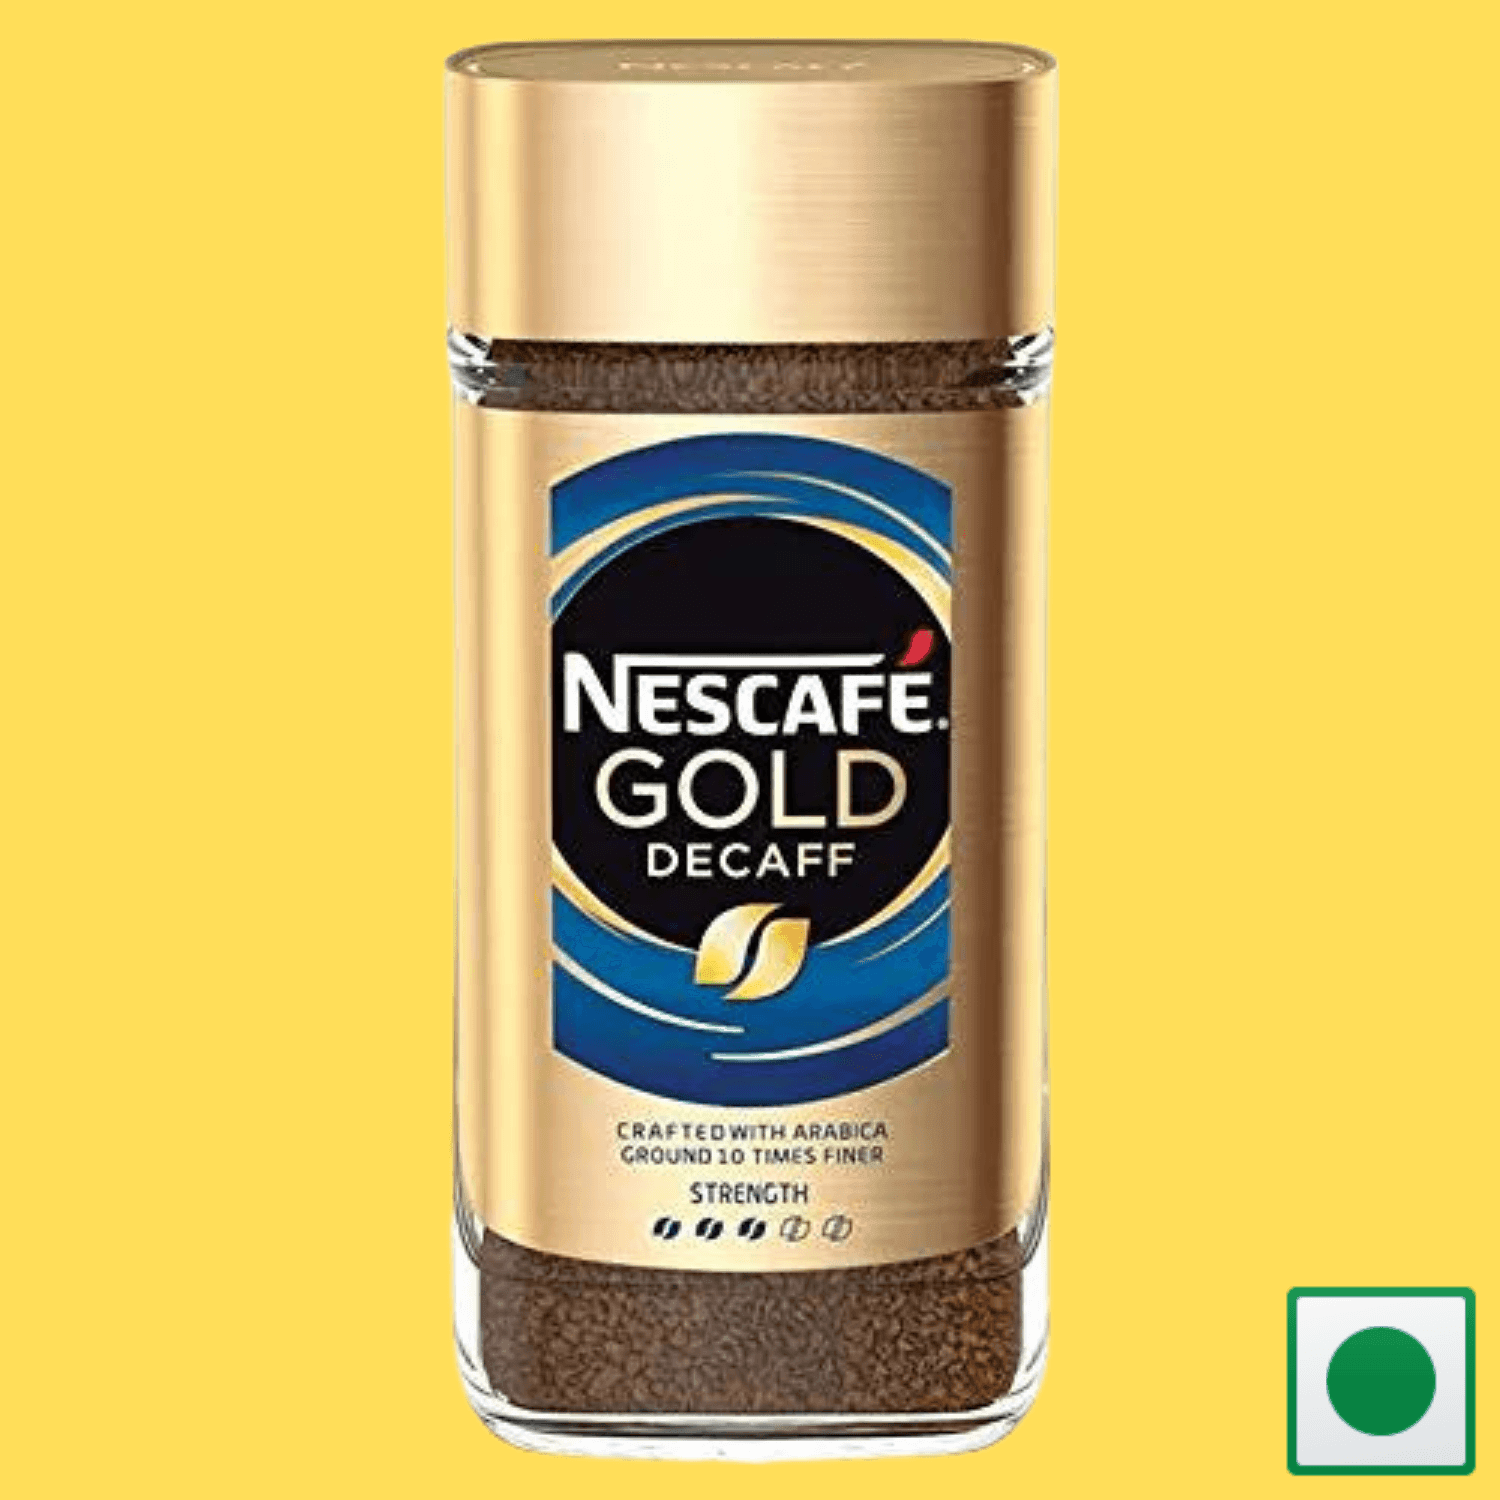 Nescafé Gold Decaff Instant Coffee Jar, 100g(Imported) - Super 7 Mart